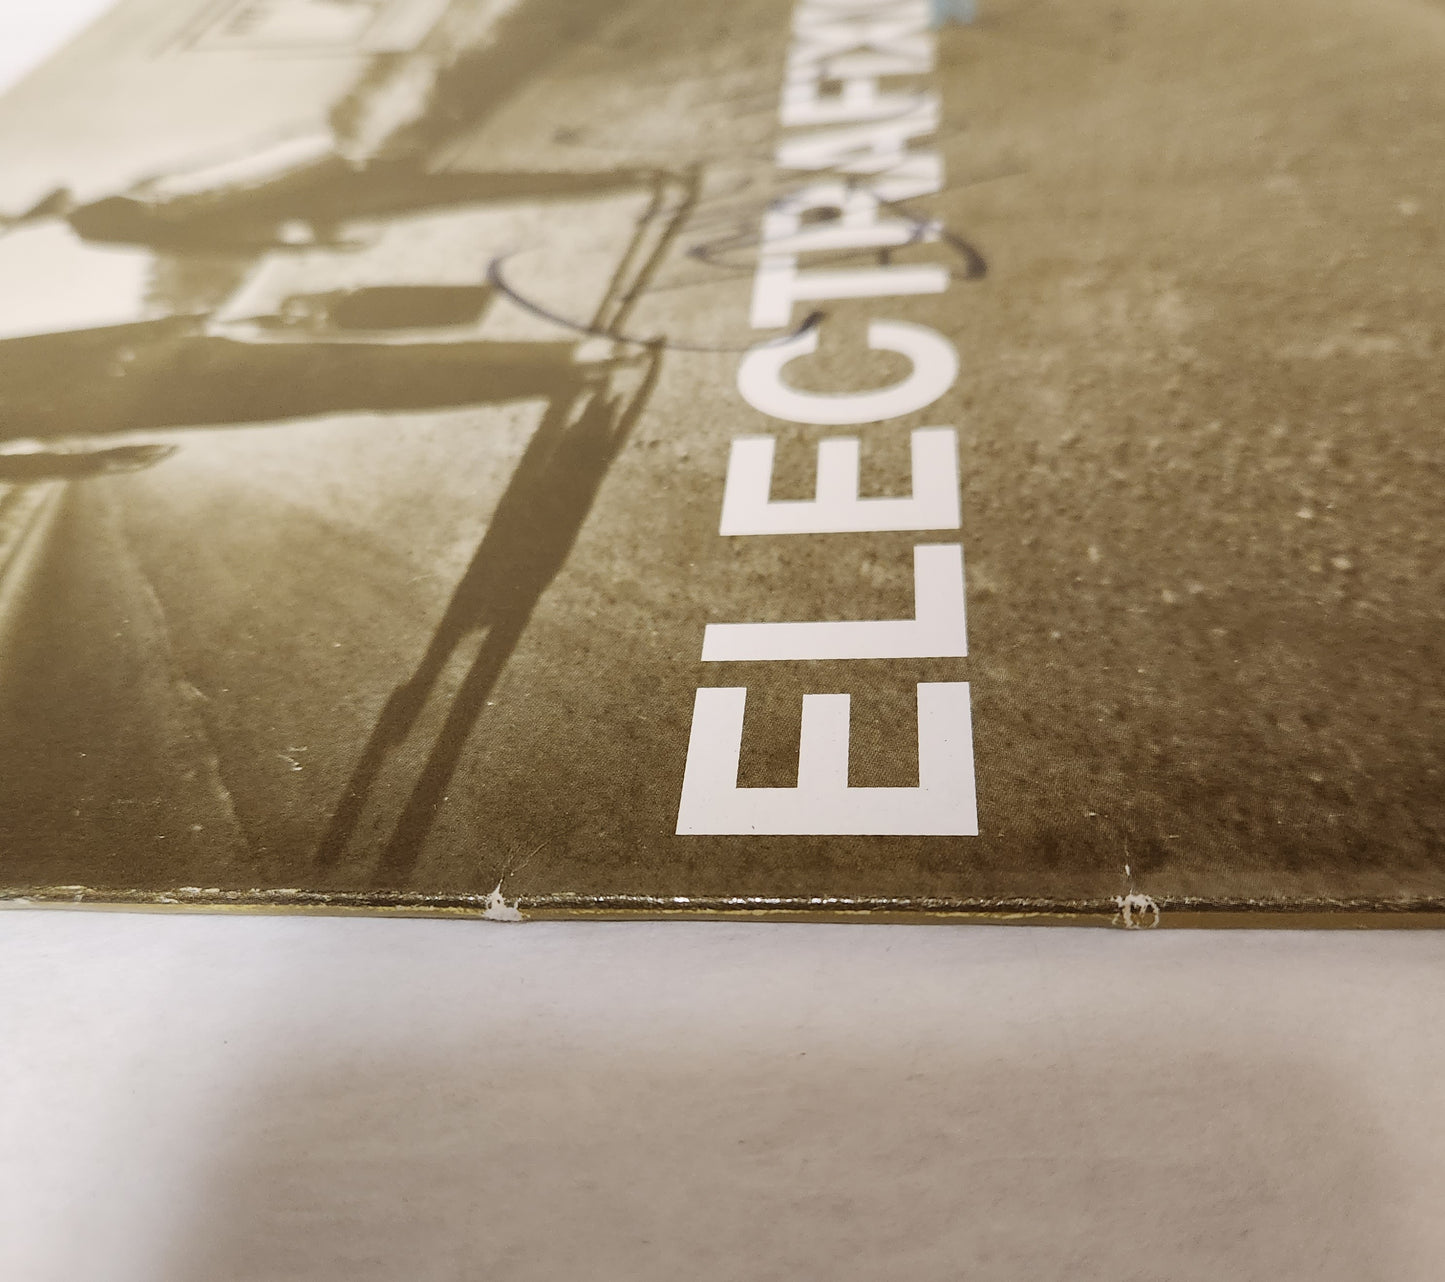 Electrafixion "Zephyr" 1994  Alt Rock Indie EP Single Album, Autographed by Ian McCulloch